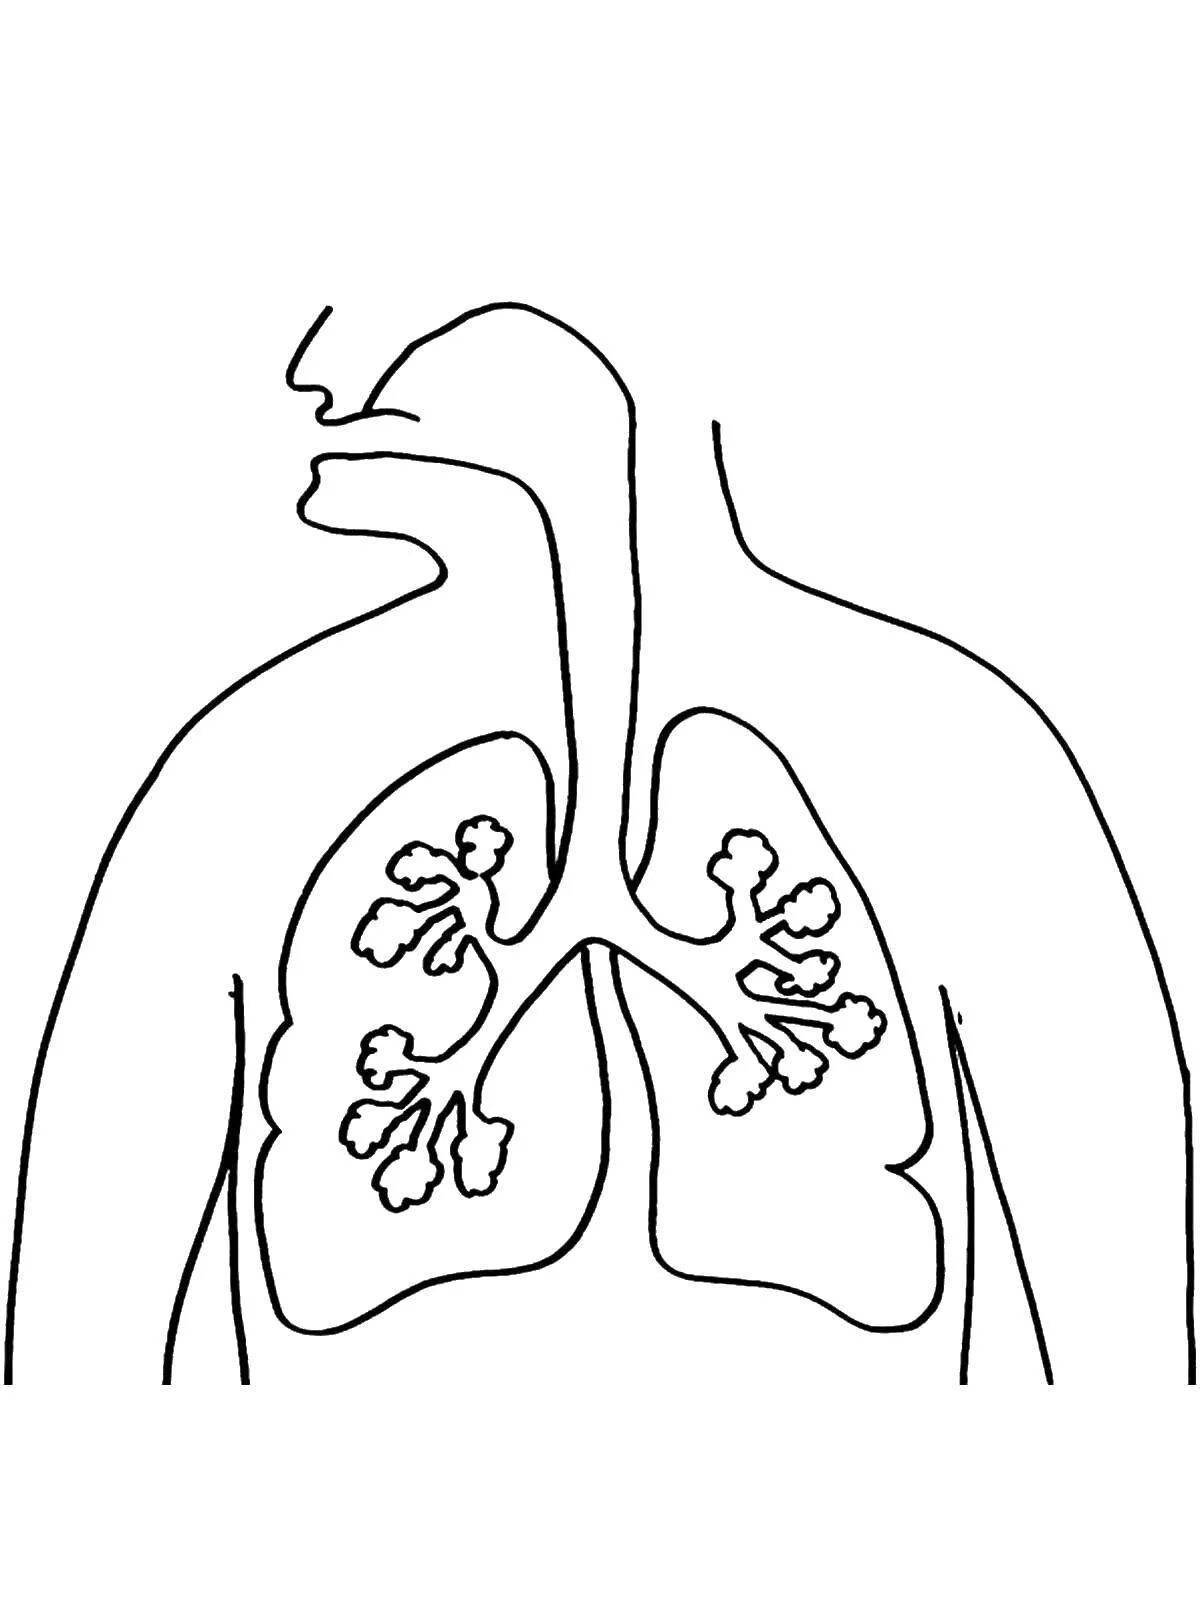 Magic coloring human lungs